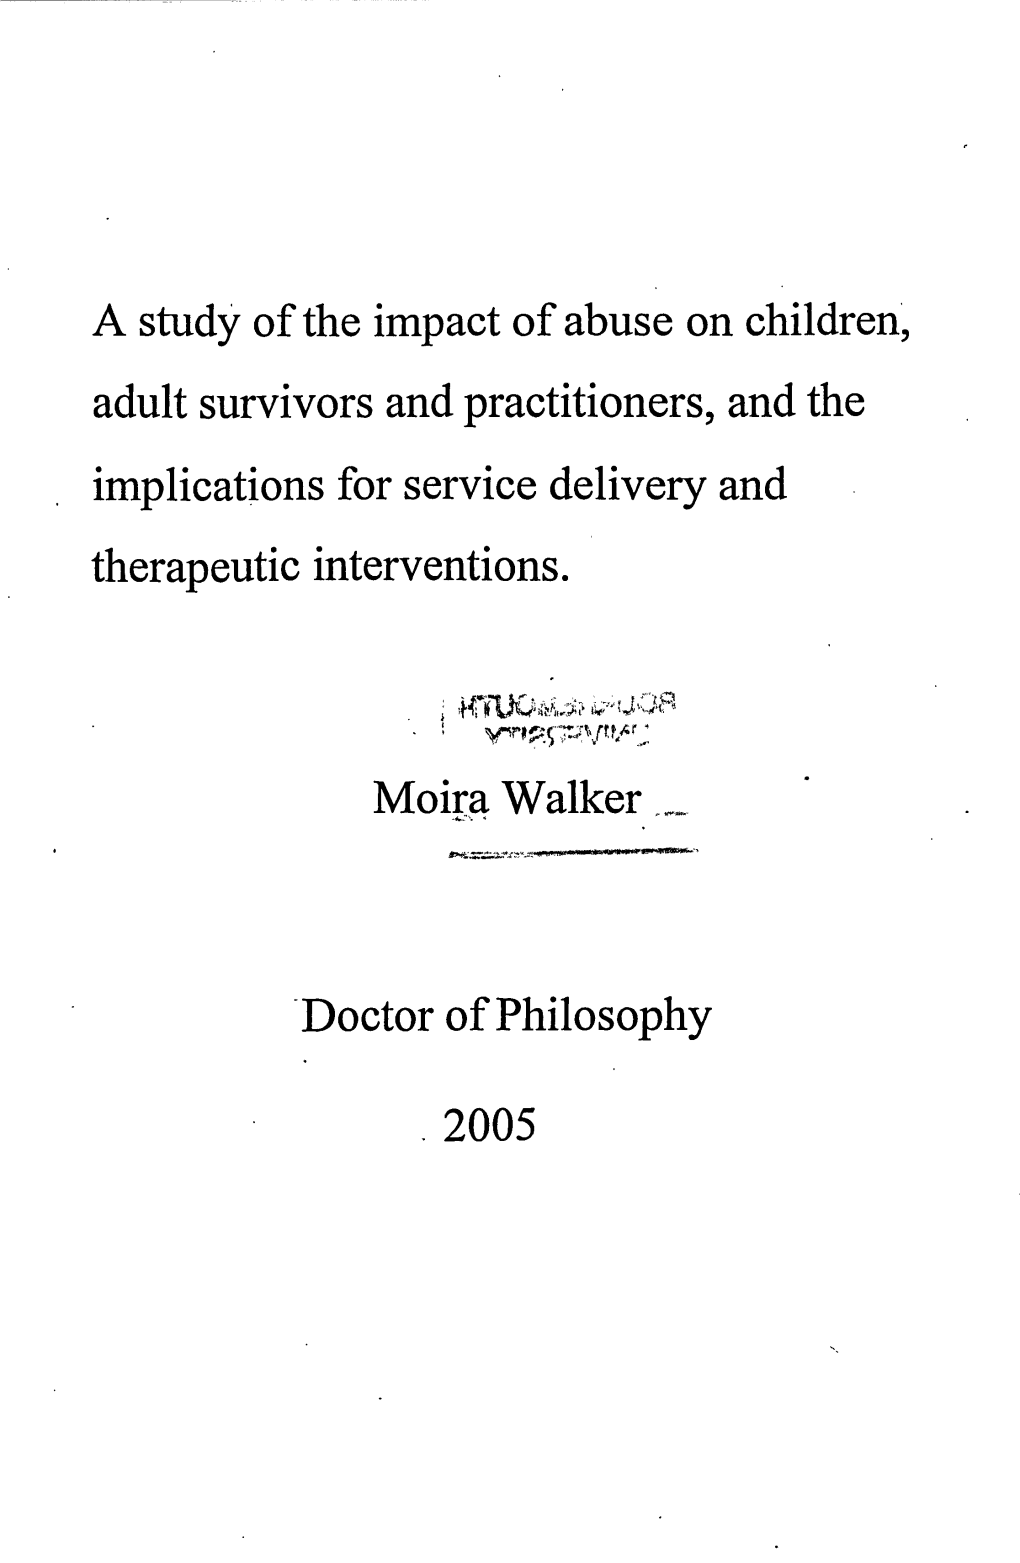 Walker,Moira Ph.D. 2005.Pdf